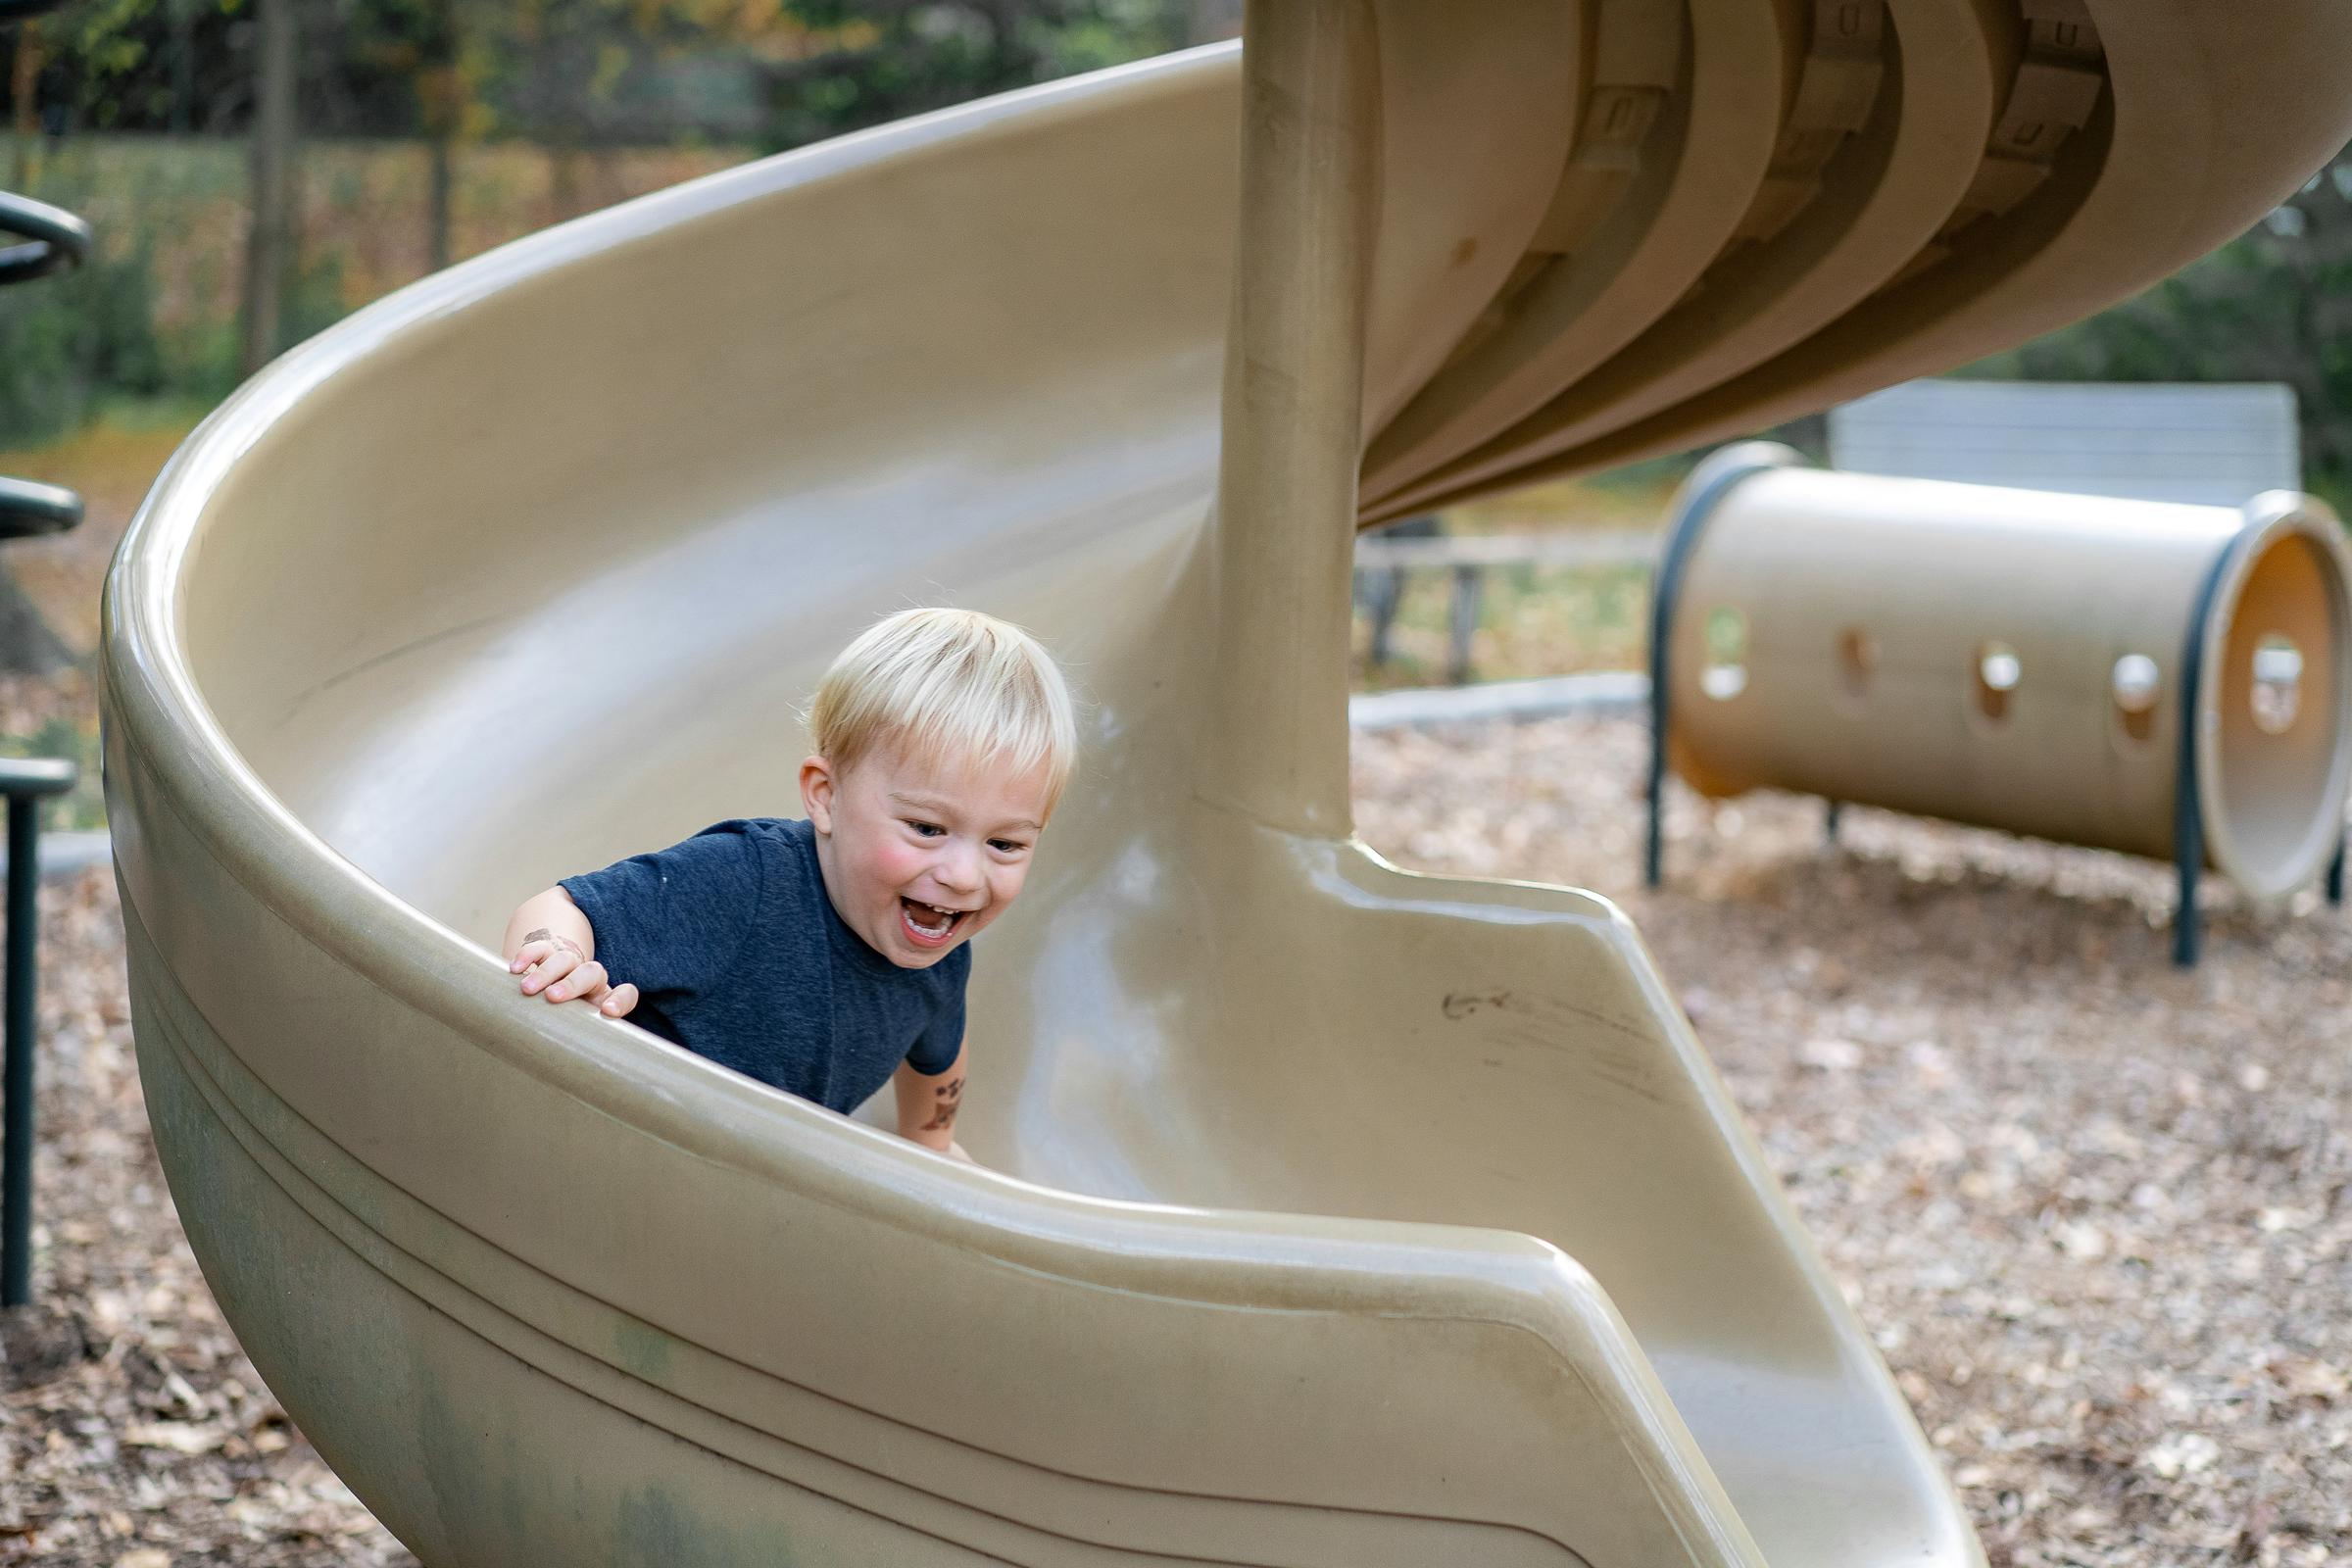 A child on a slide | Source: Unsplash